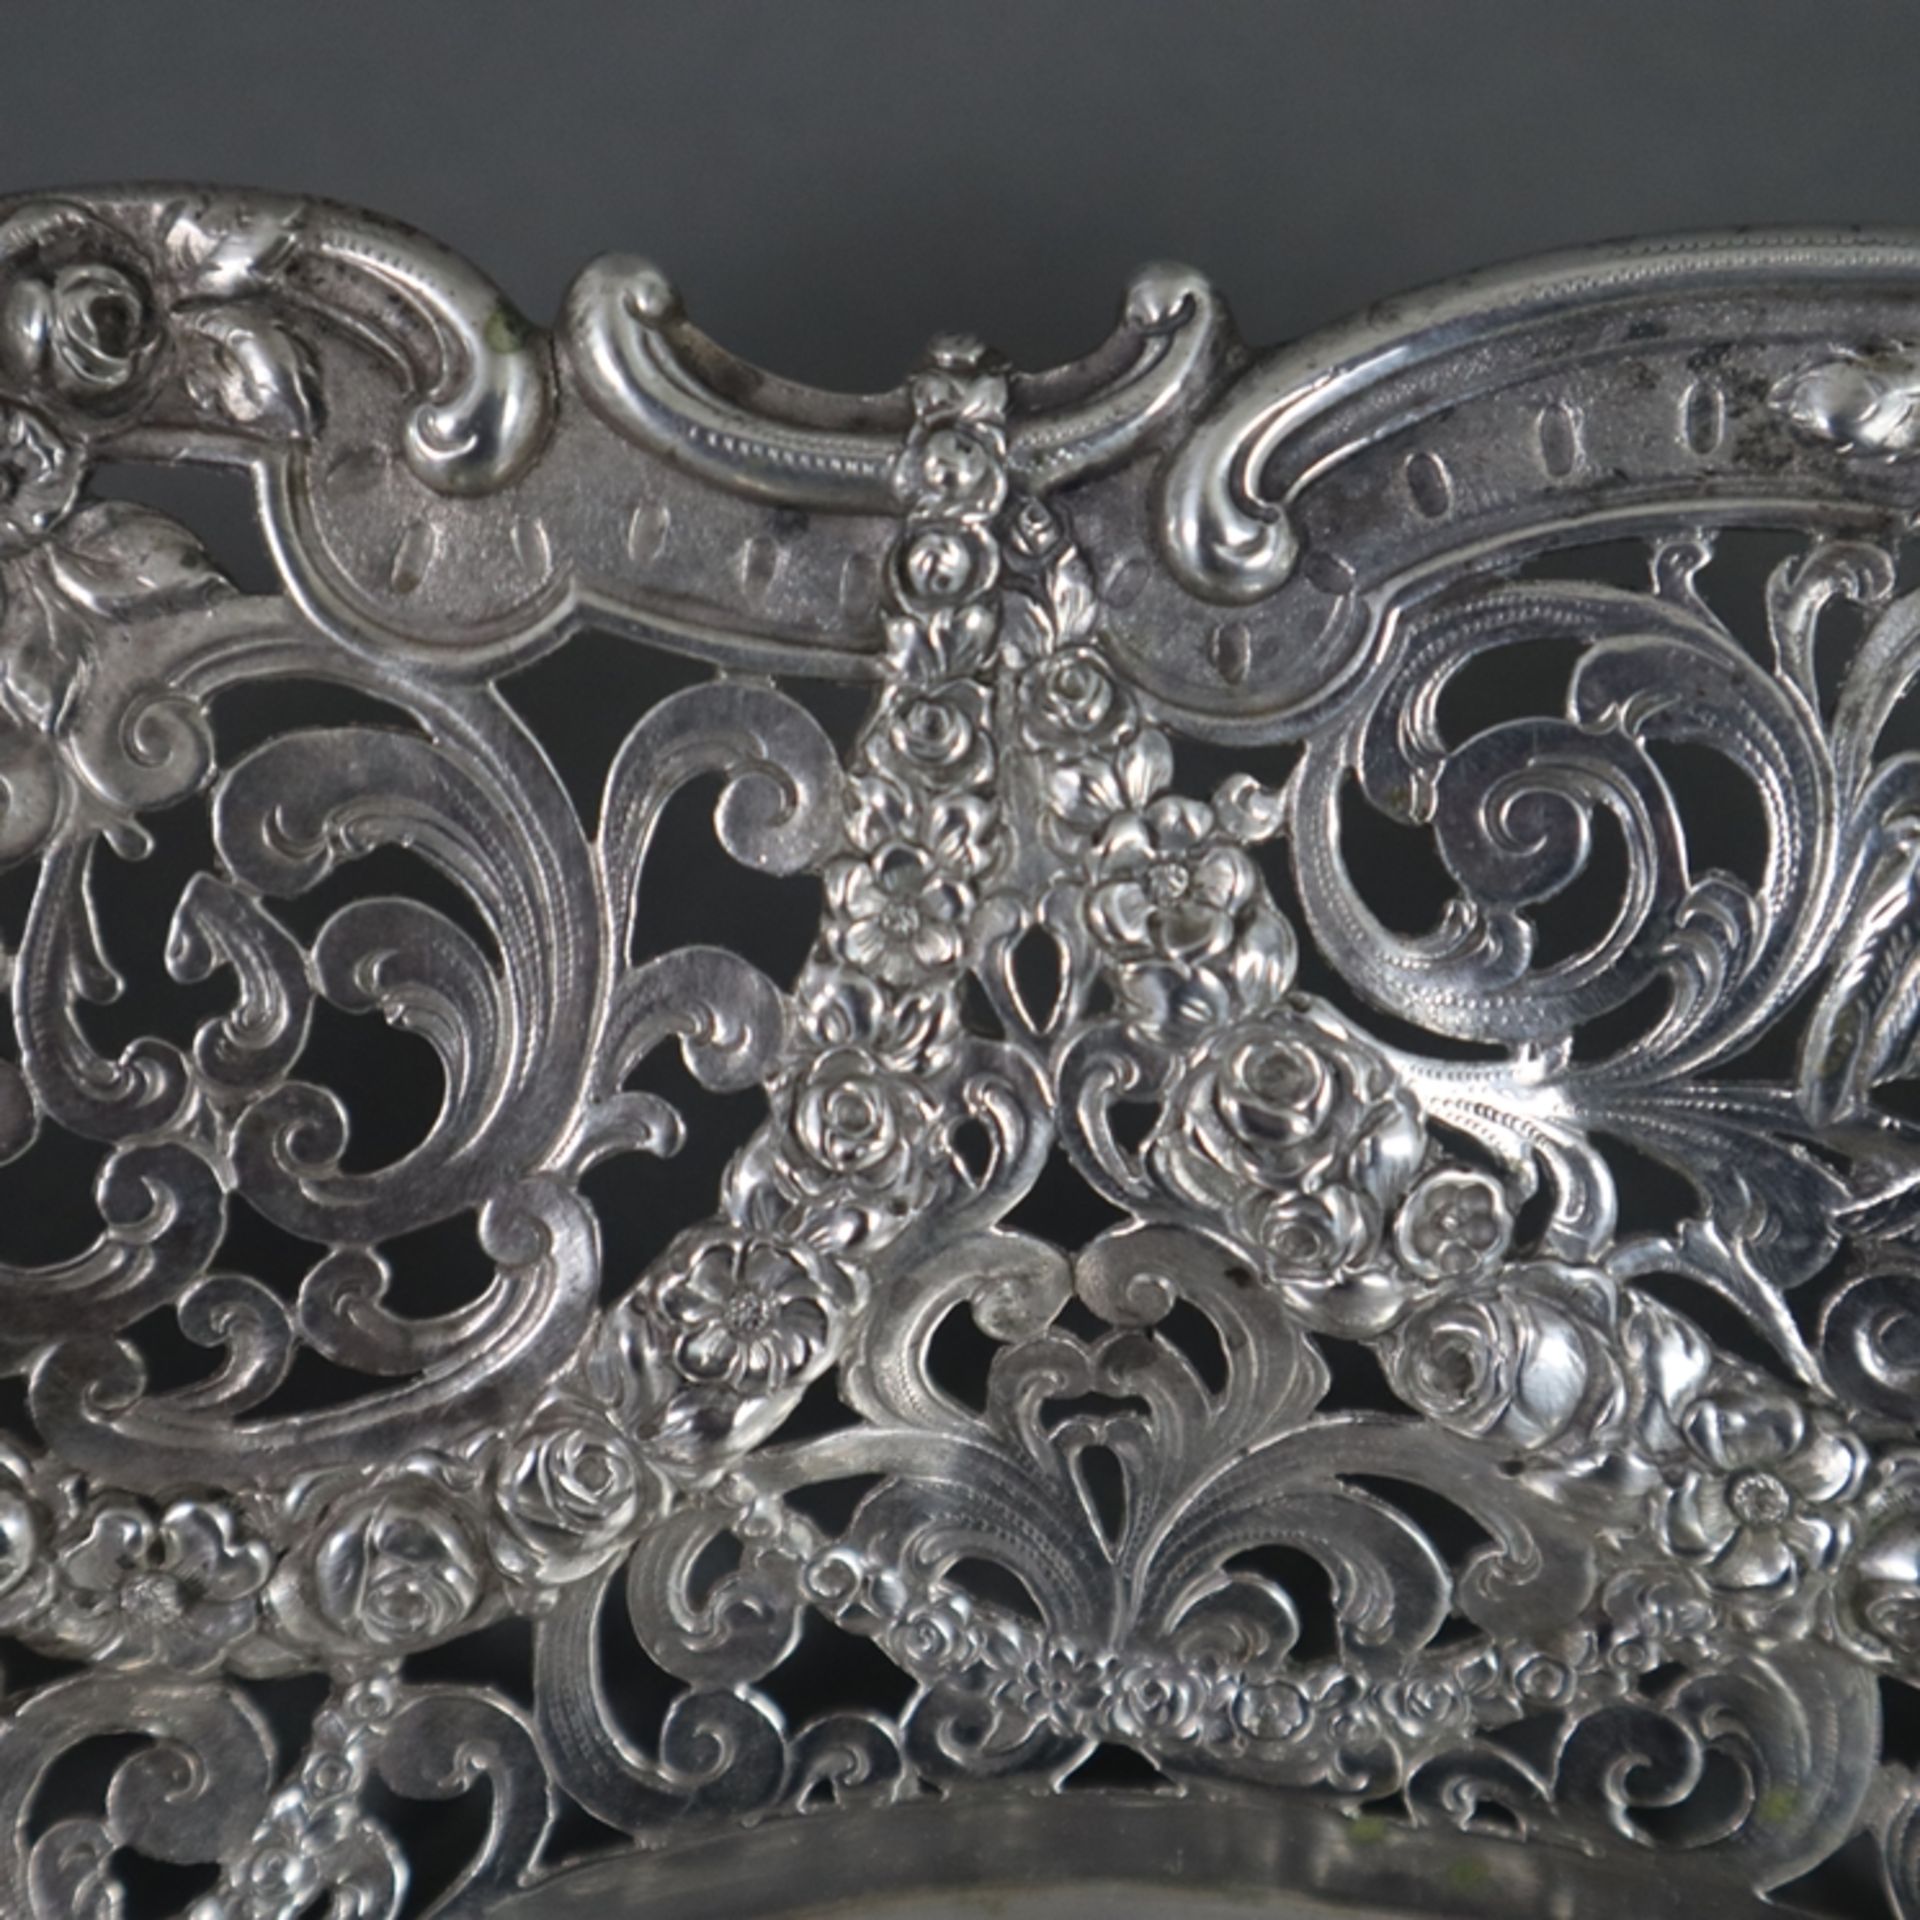 Üppig dekorierte Korbschale - deutsch, Silber 800/000, gestempelt, oval, geschweifte filigran durch - Bild 6 aus 10